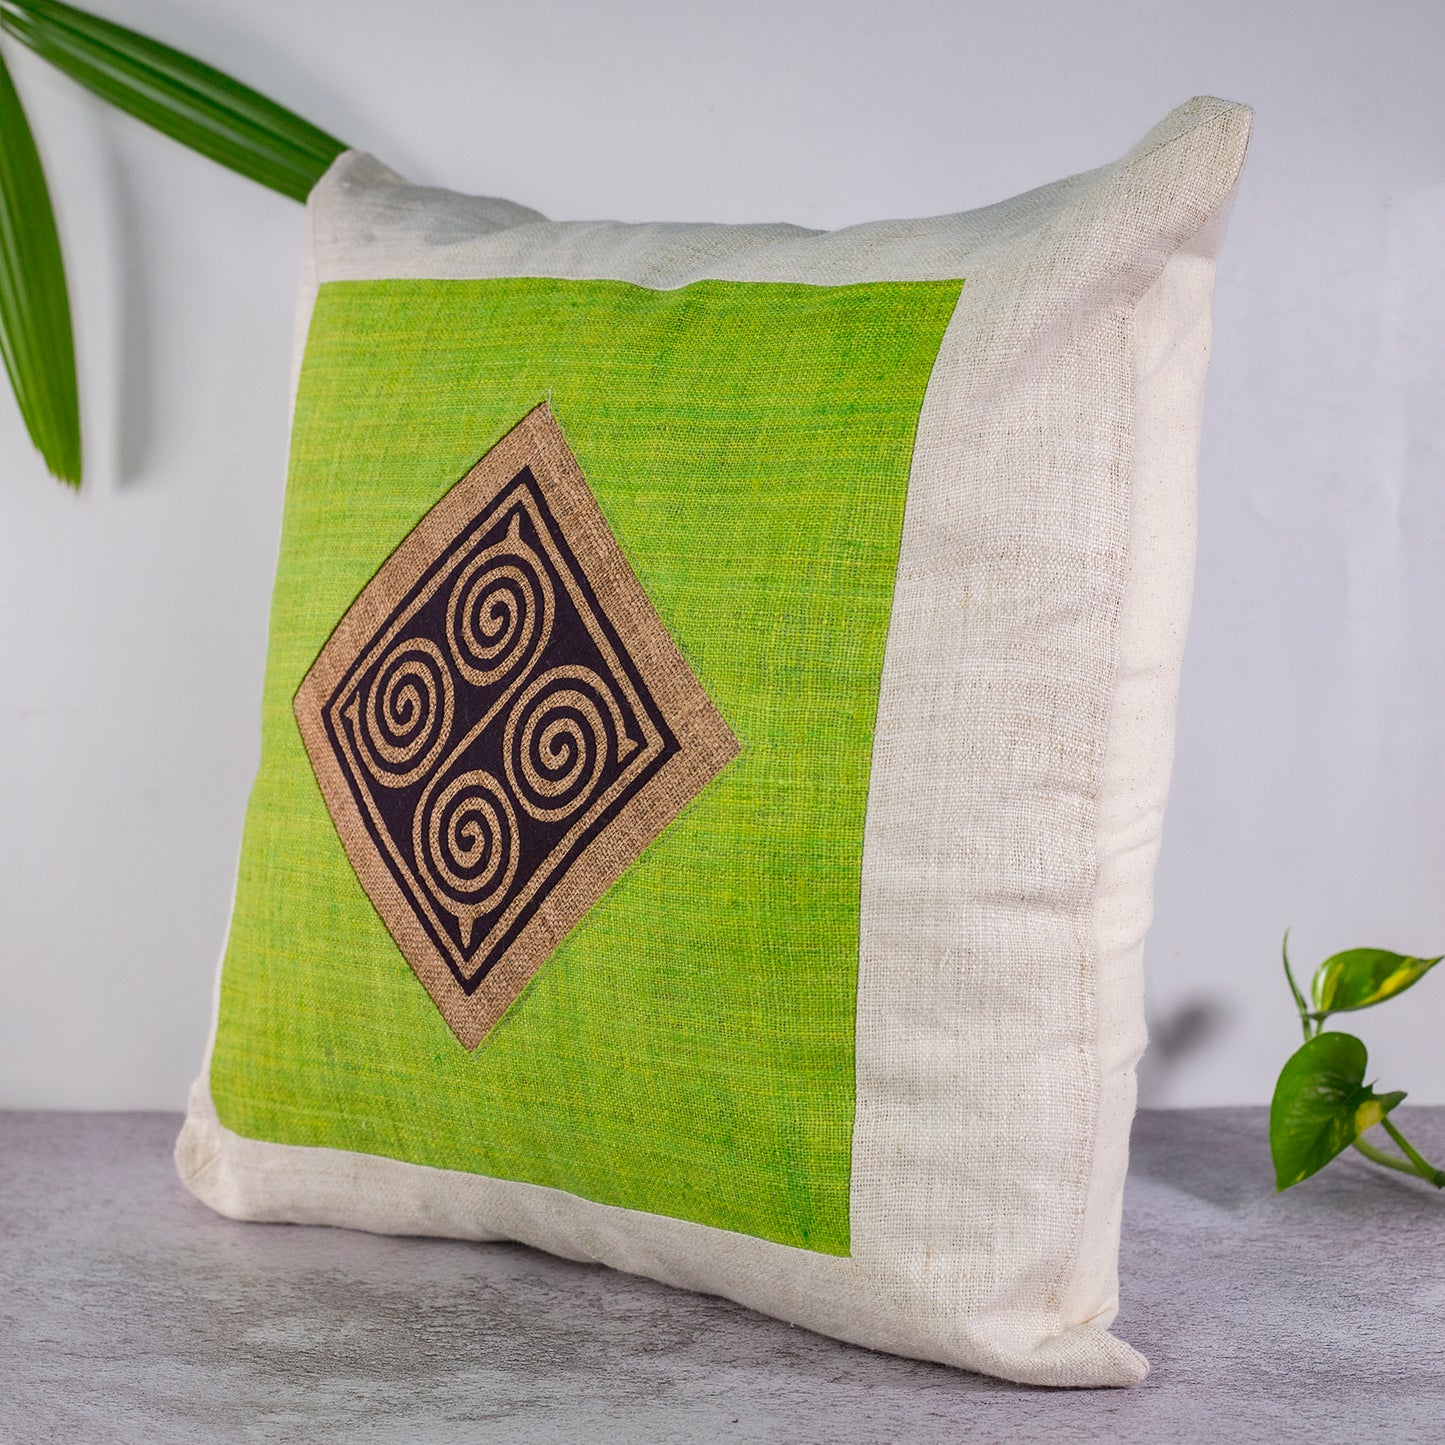 Hemp Cushion Cover in Beige- 100% handmade, green hemp, black and brown pattern at center